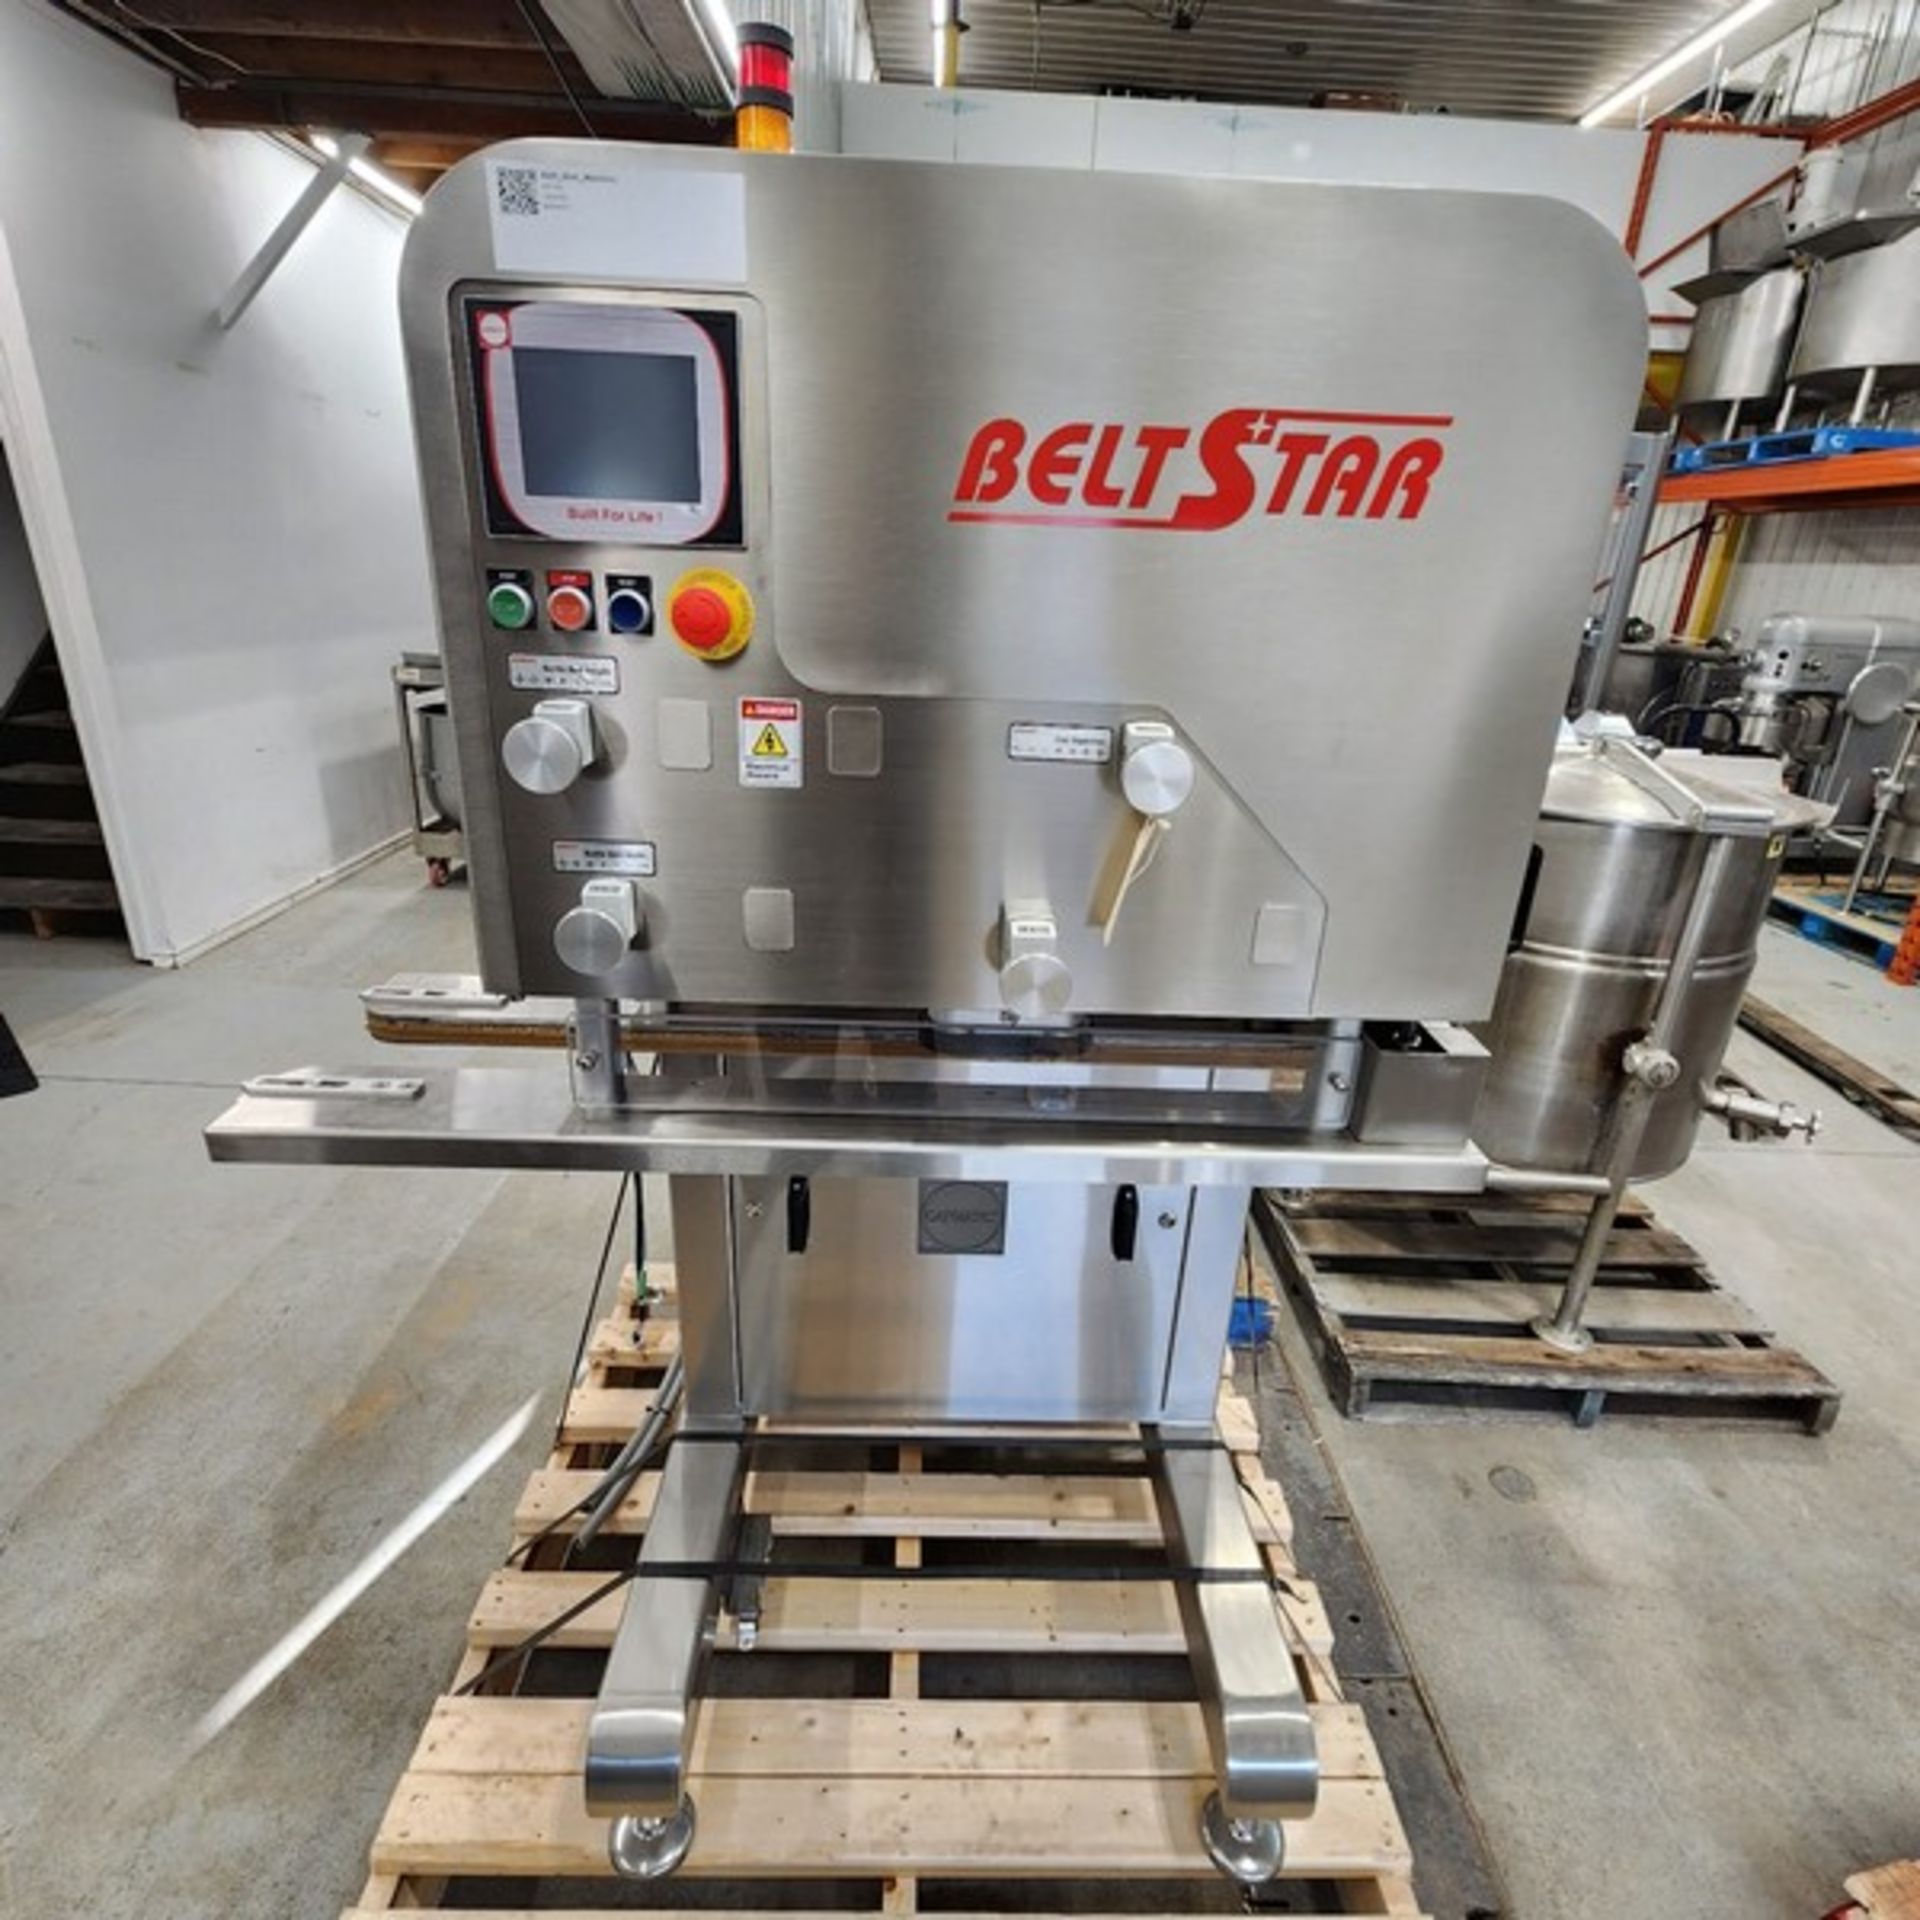 Beltstar torquer capper Servo torque high precision & effeiciency Made in Canada by capmatic. 2019